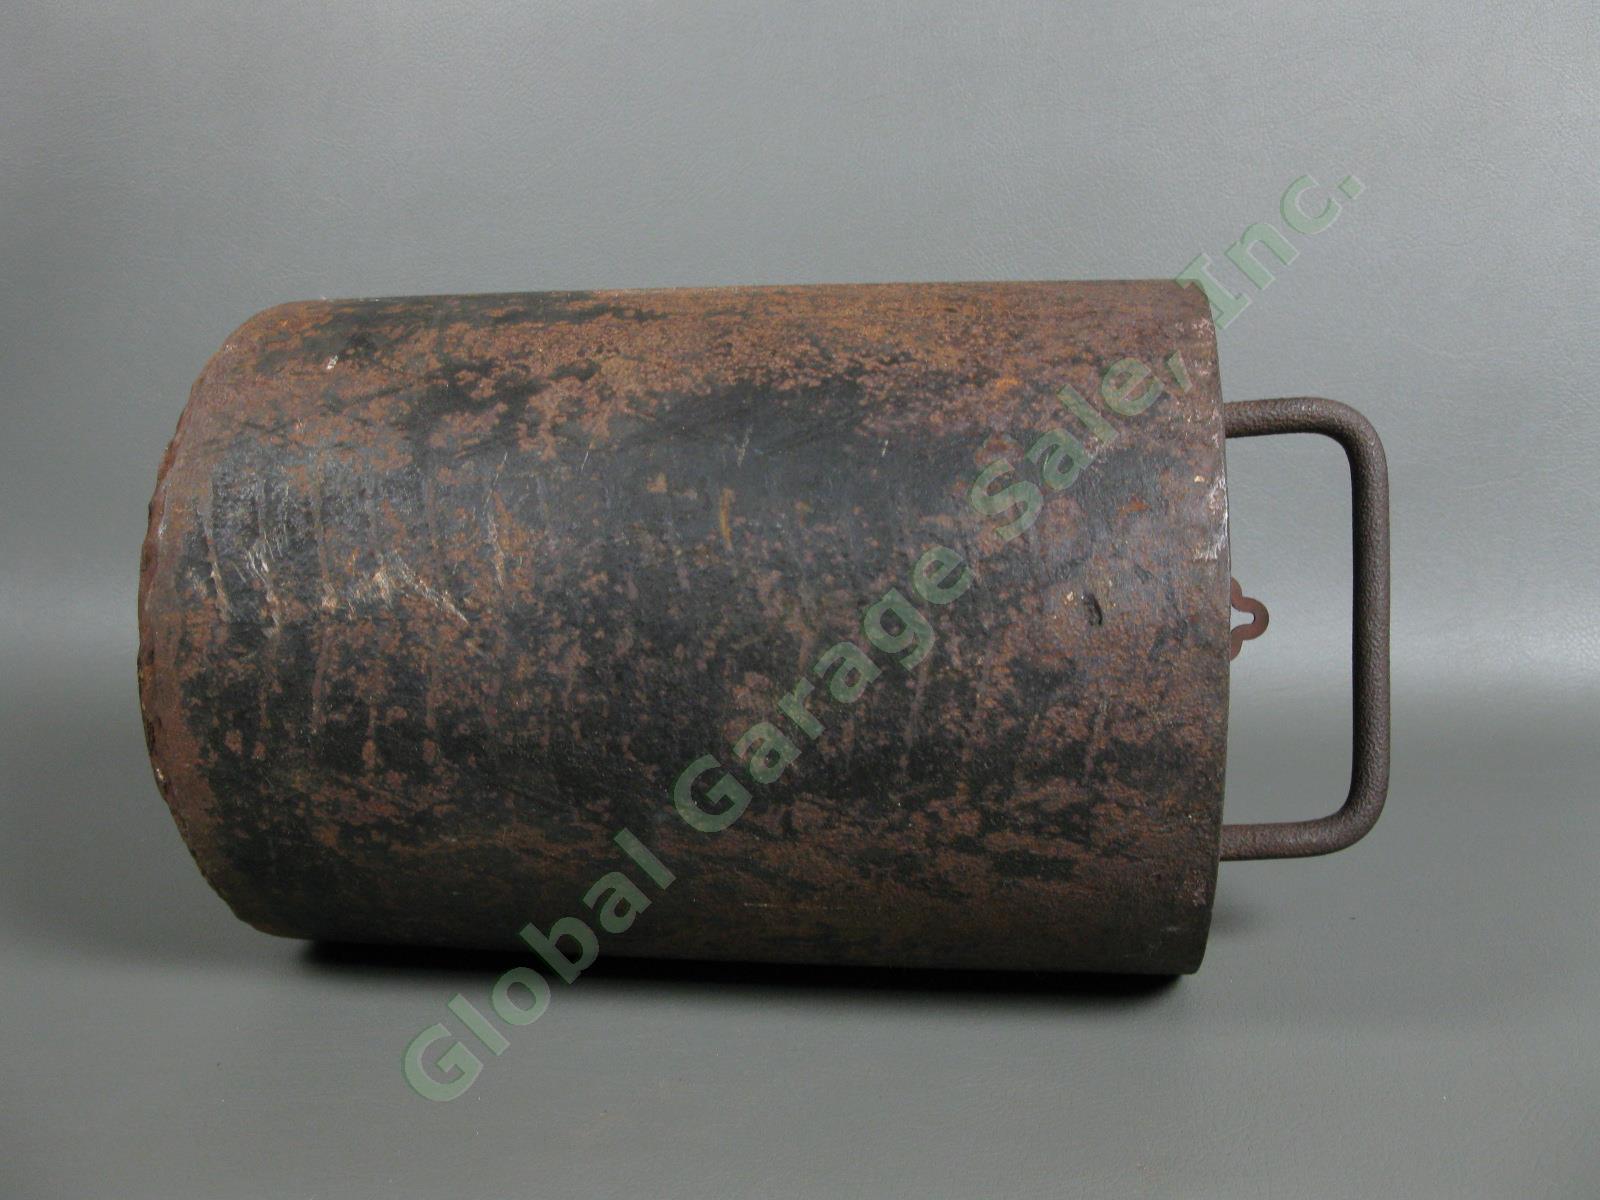 Antique Cast Iron Cylinder Ground Drop Safe Deposit Box Original Bates Lock Key 1